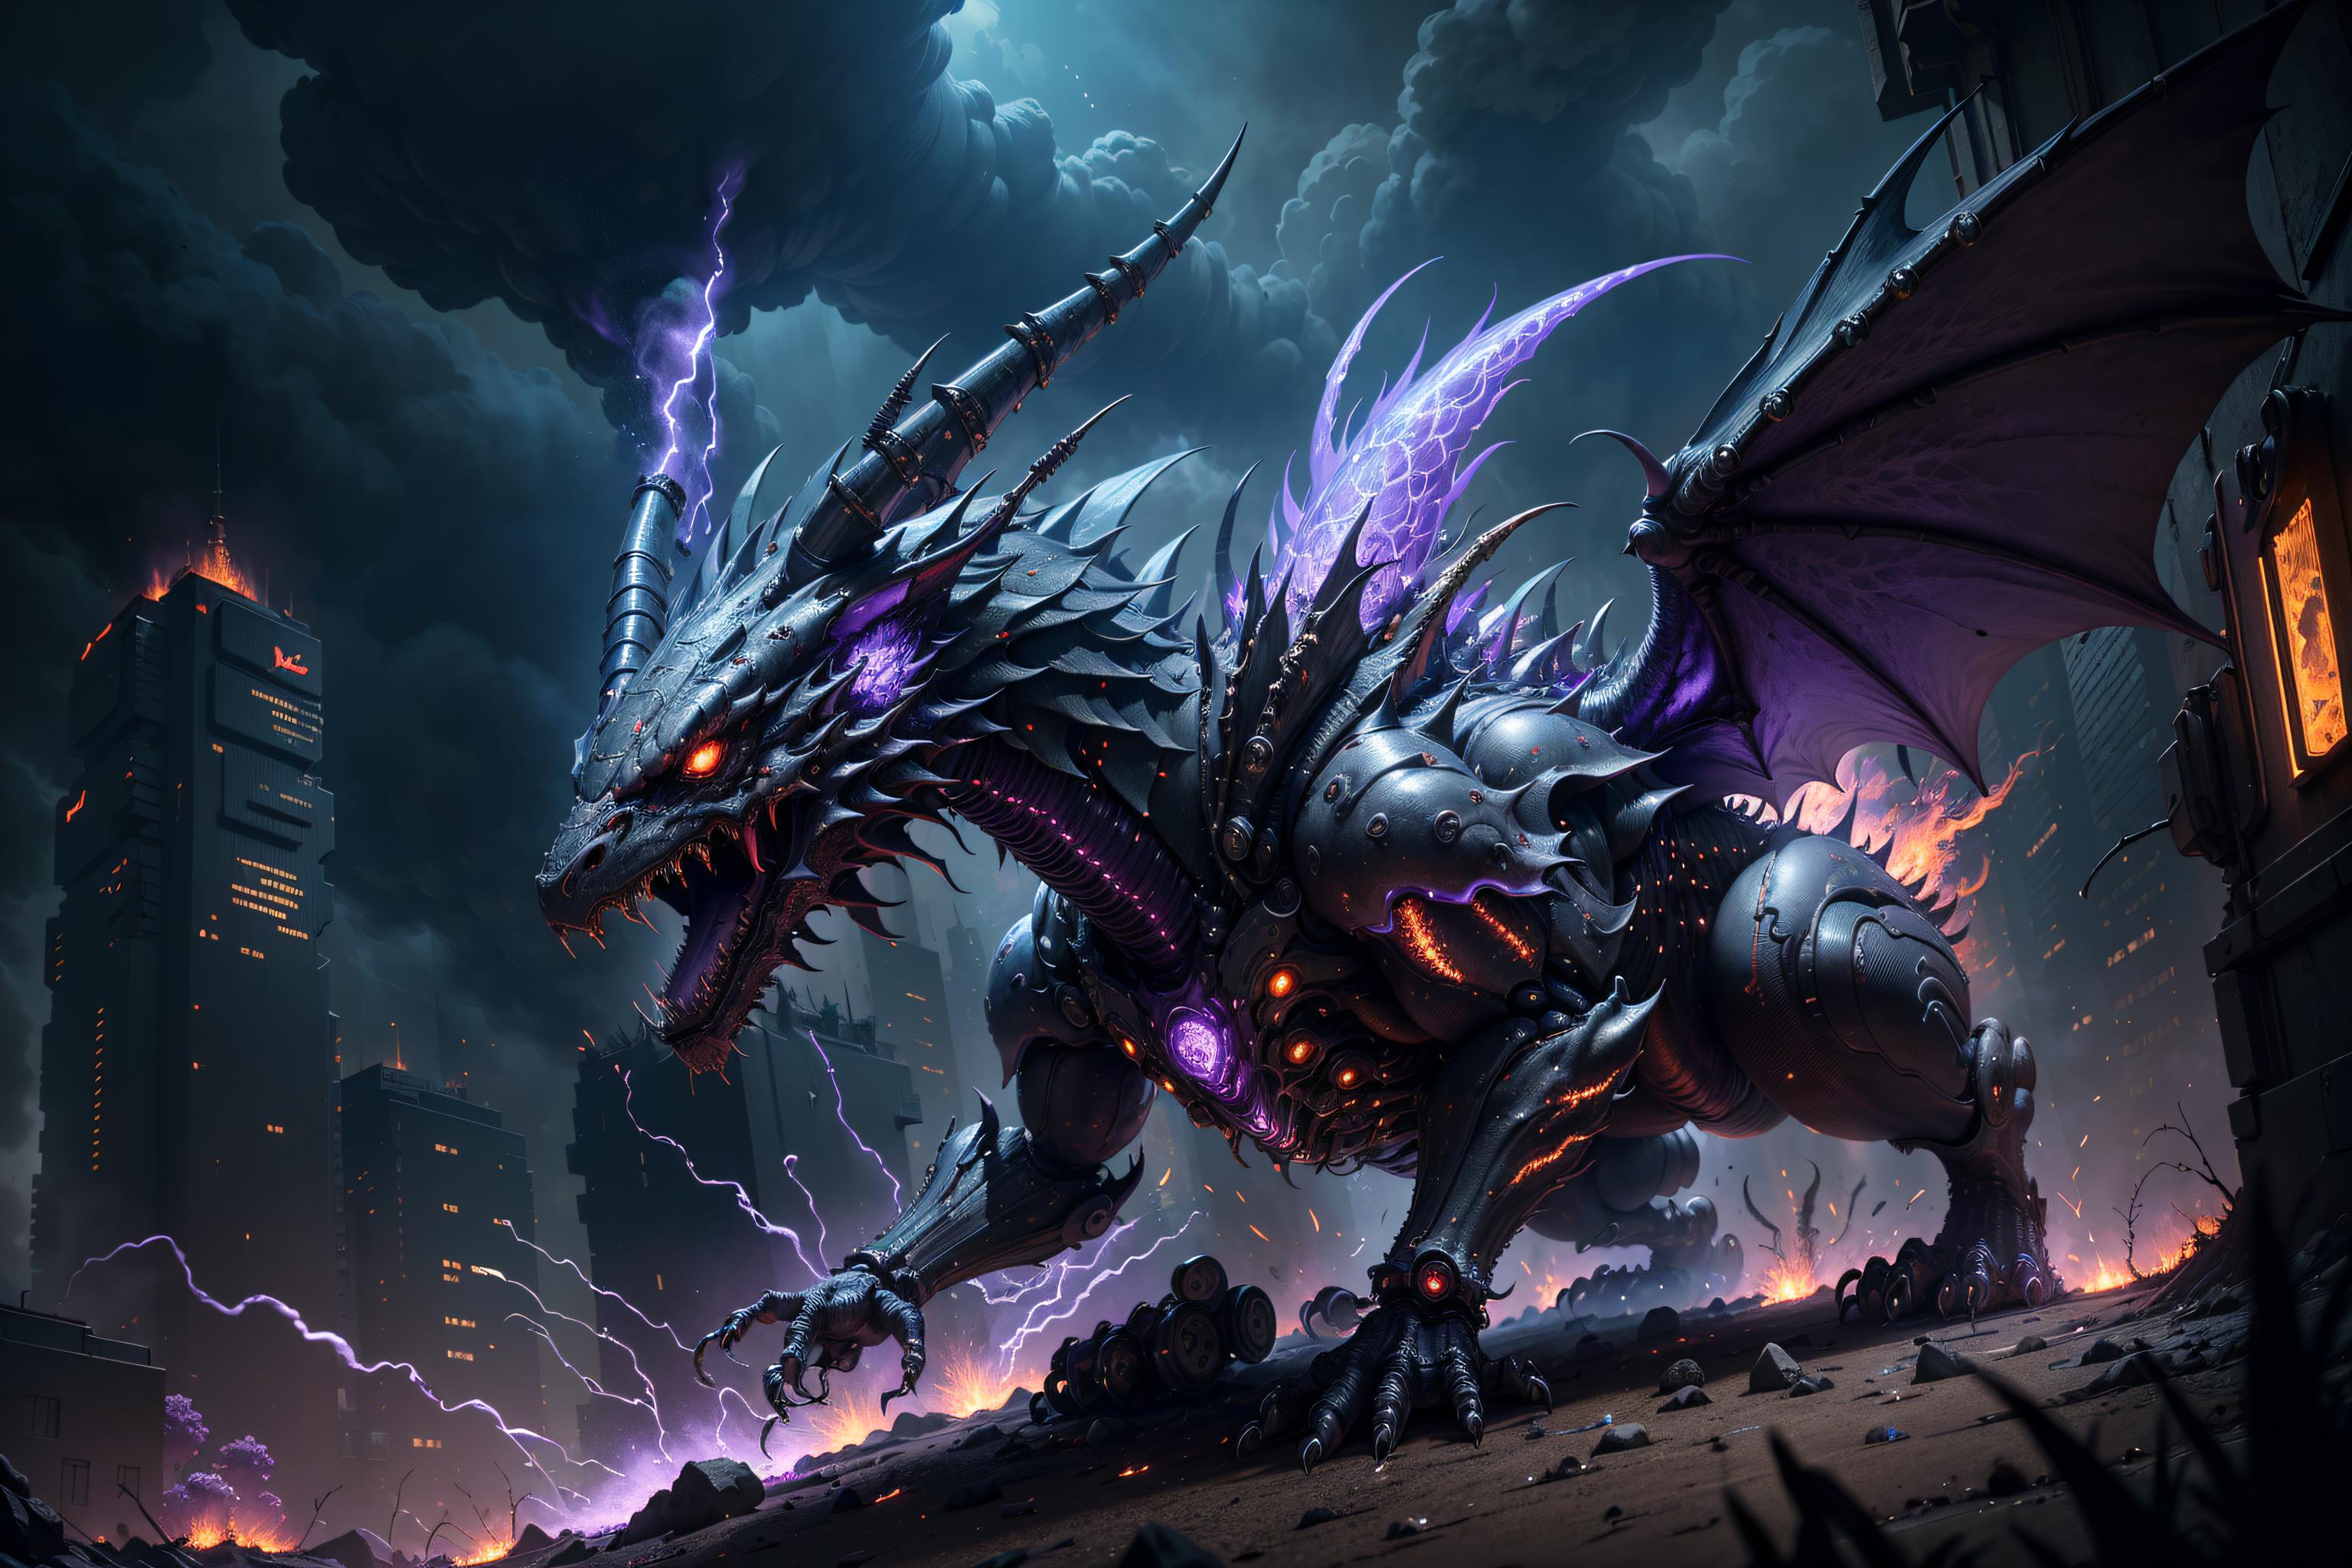 IronCatLoRA #2 - Dragons image by Cathexis